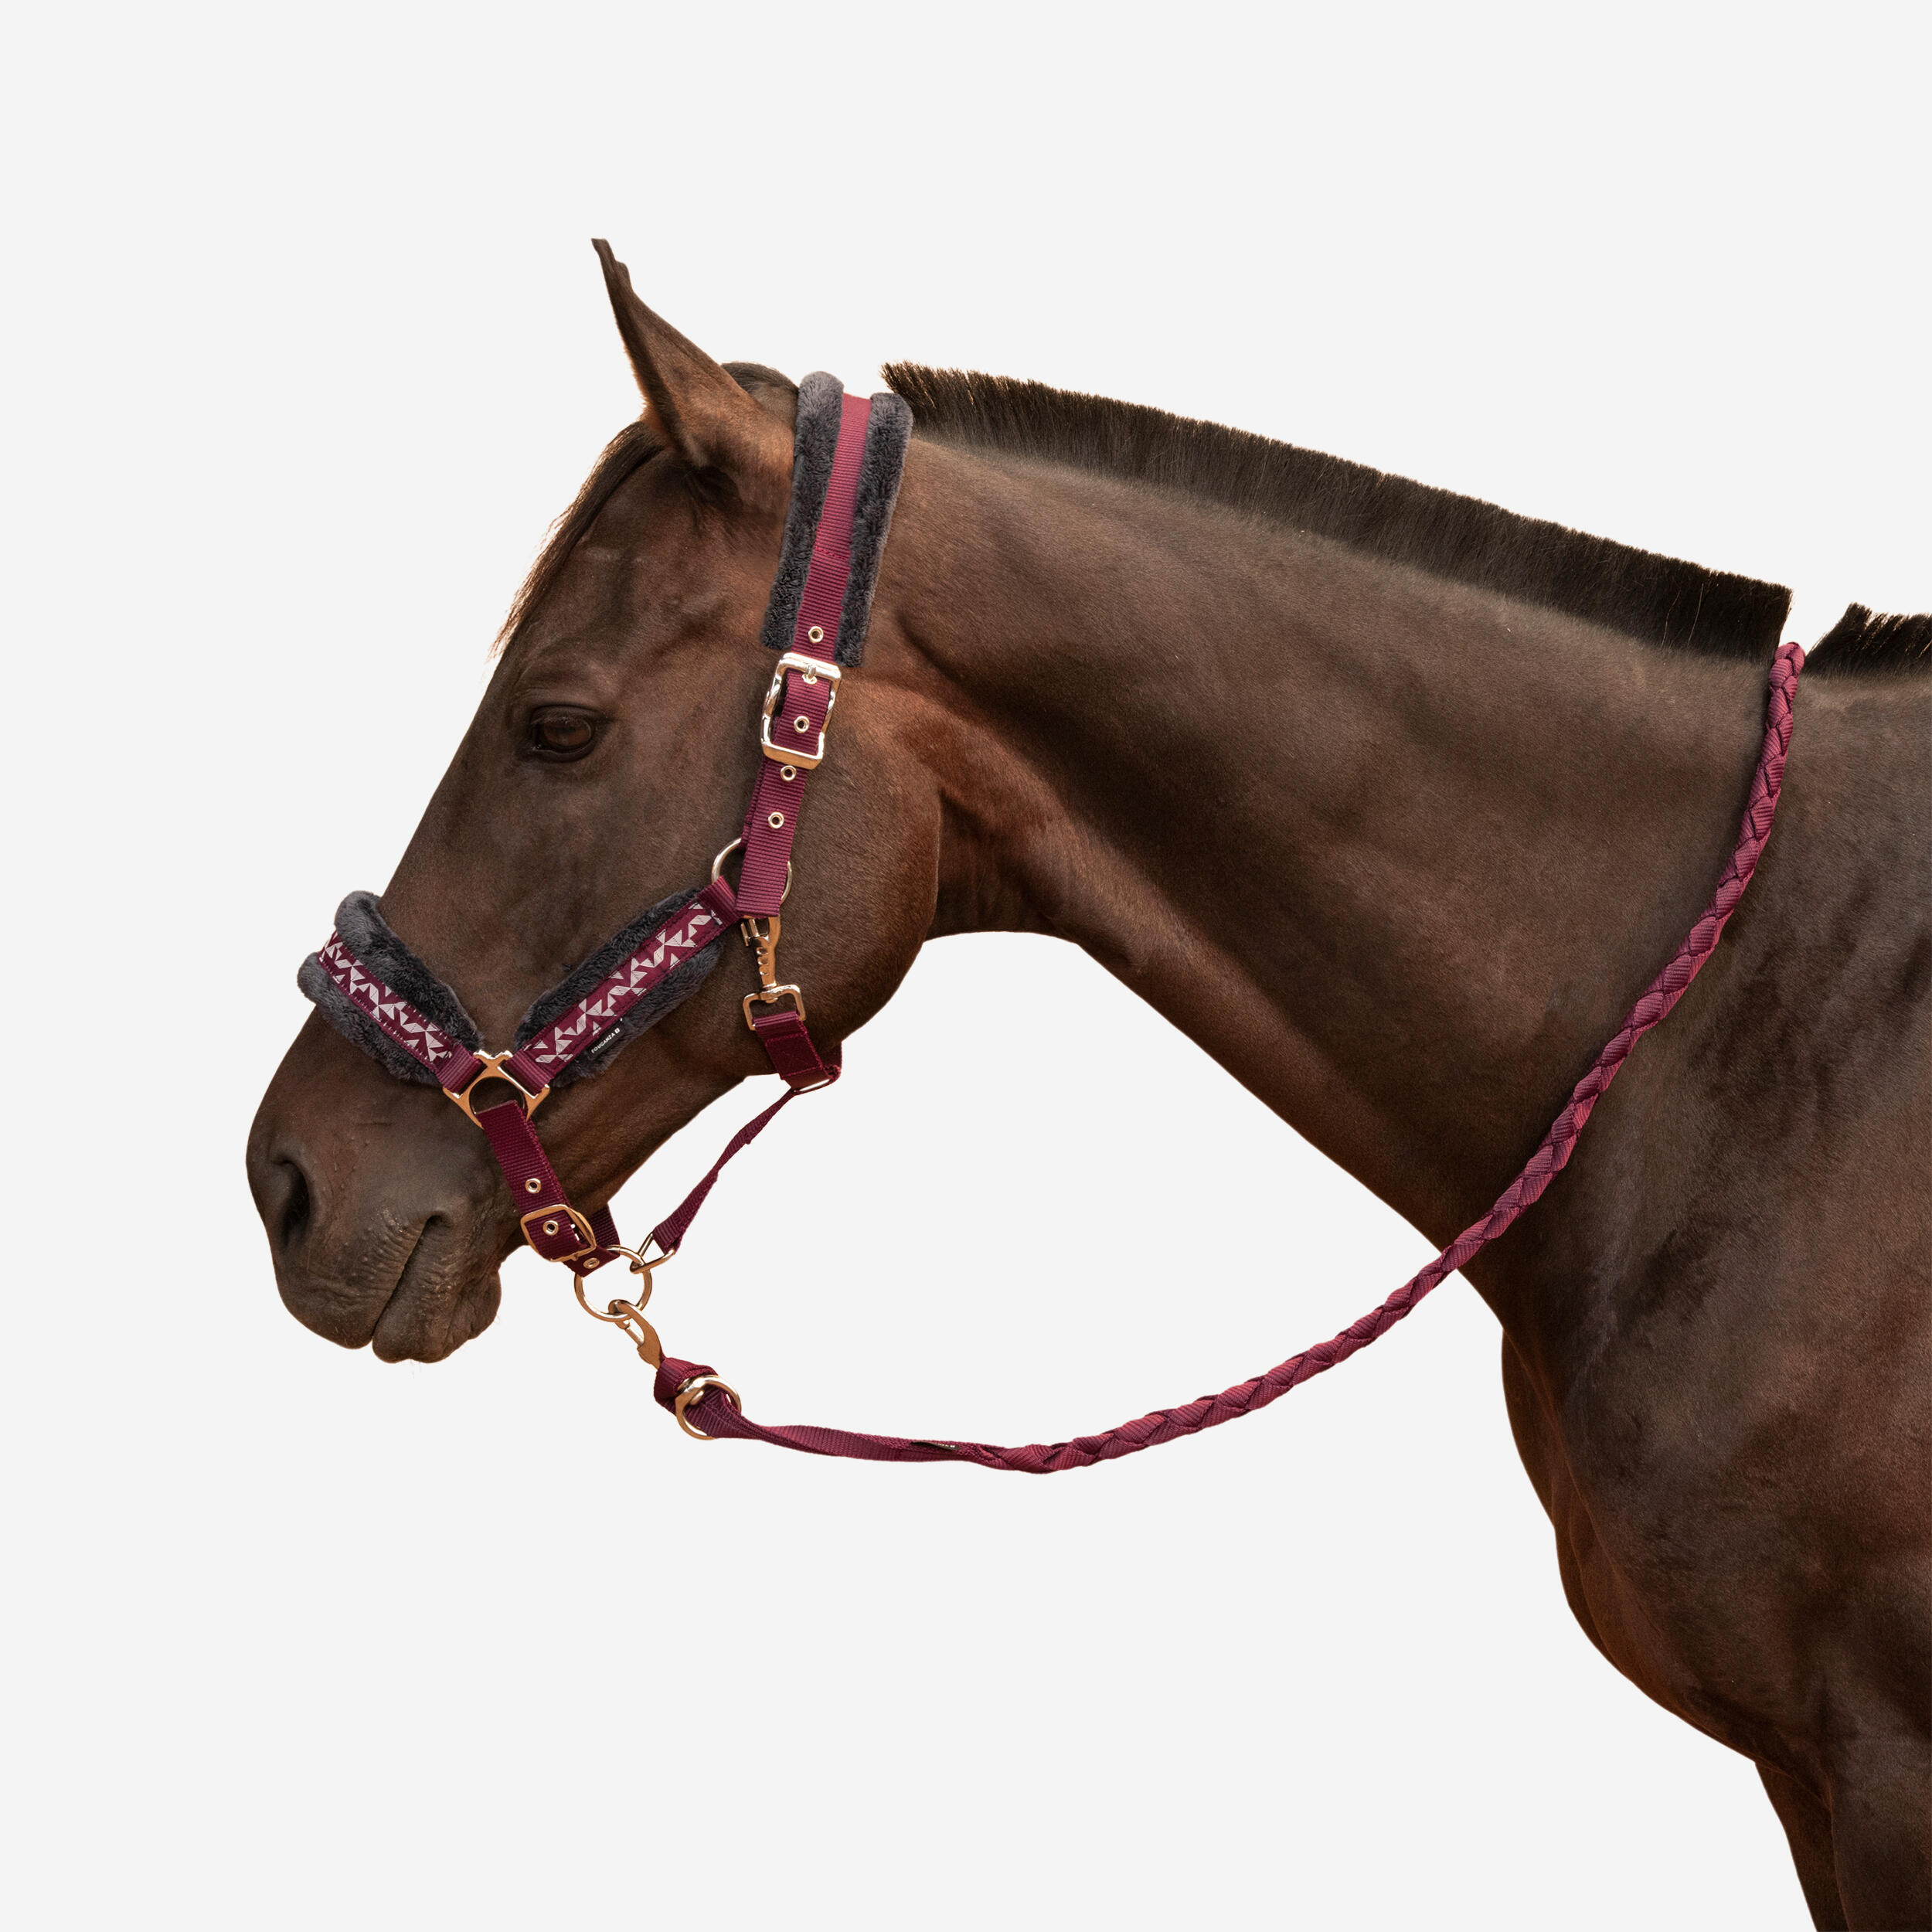 Horse Riding Halter + Leadrope Kit for Horse & Pony Comfort - Burgundy/Blue/Black 1/4